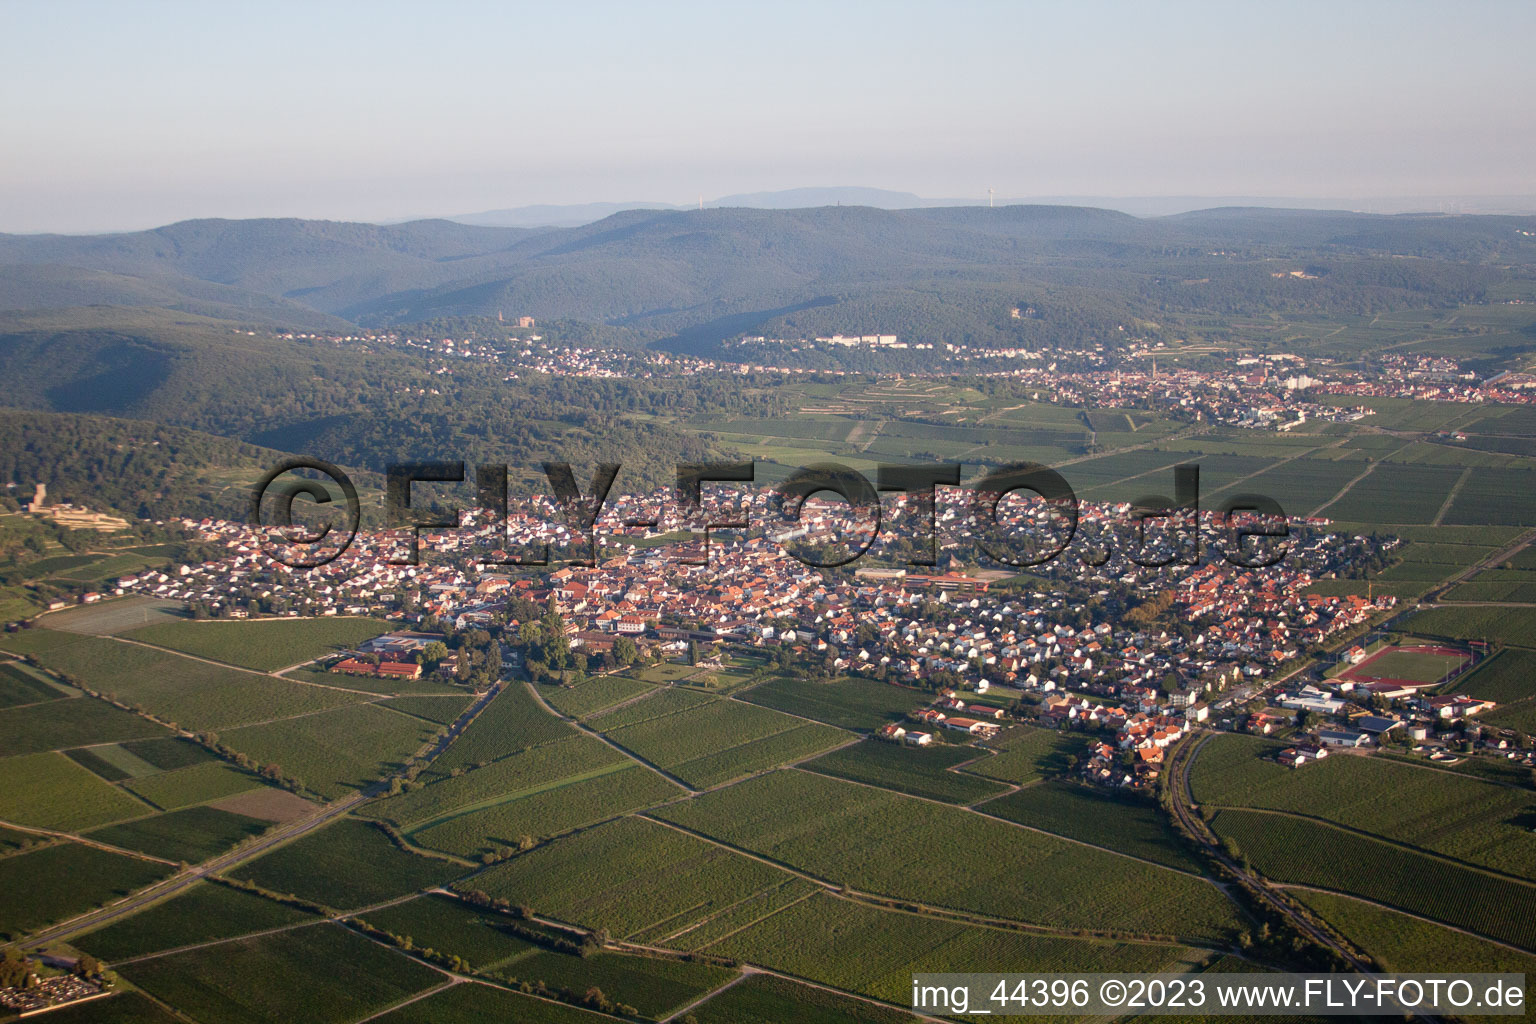 Drone recording of Wachenheim an der Weinstraße in the state Rhineland-Palatinate, Germany